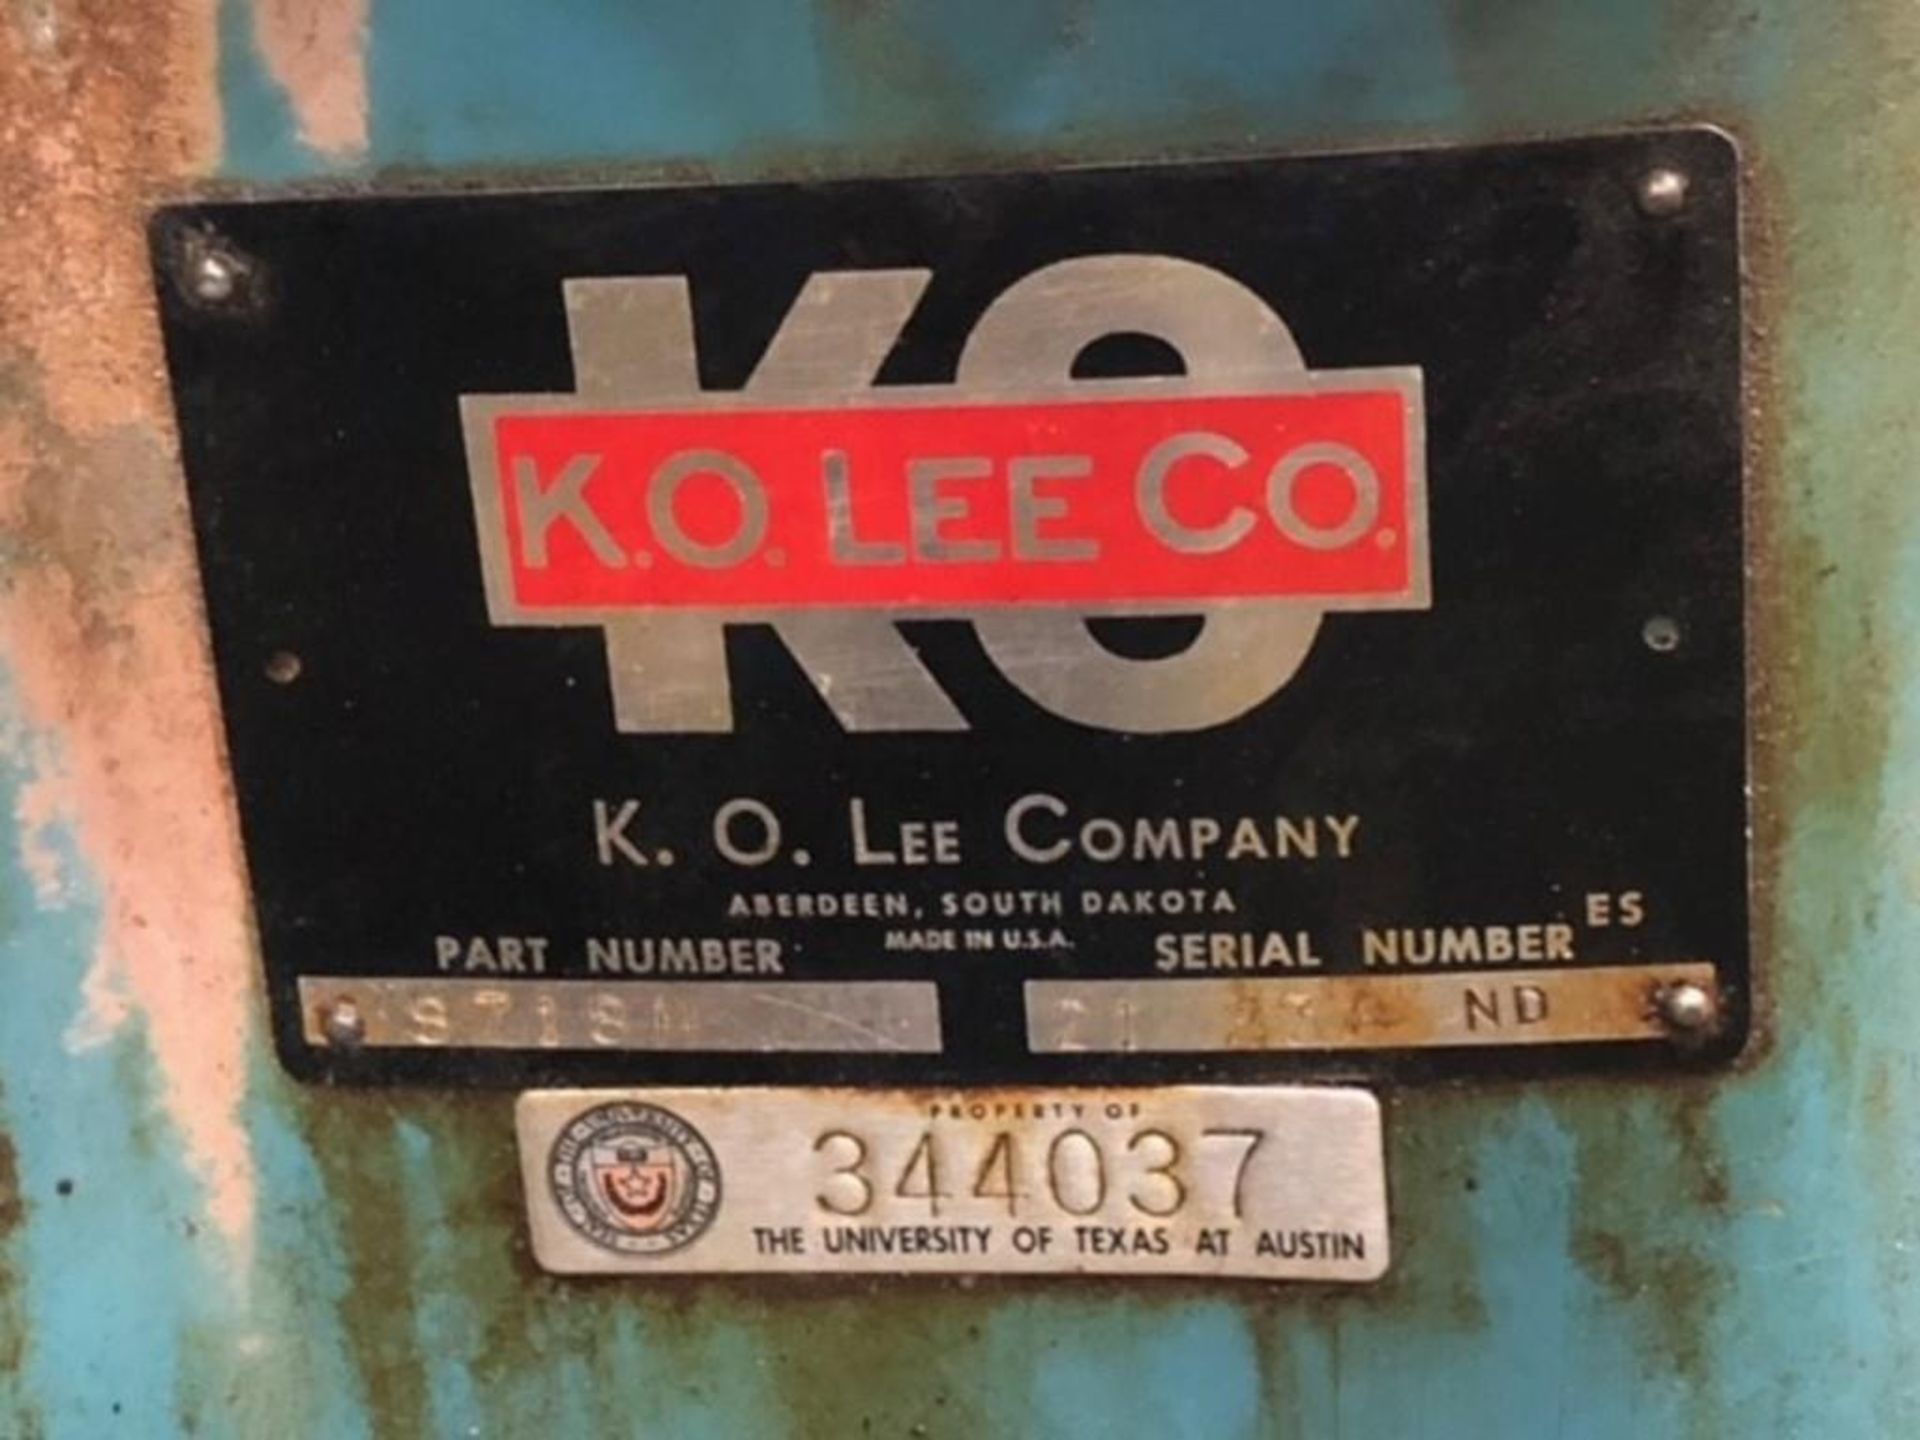 6" x 18" K.O. Lee Model S718 Reciprocating Table Surface Grinder - Image 6 of 6